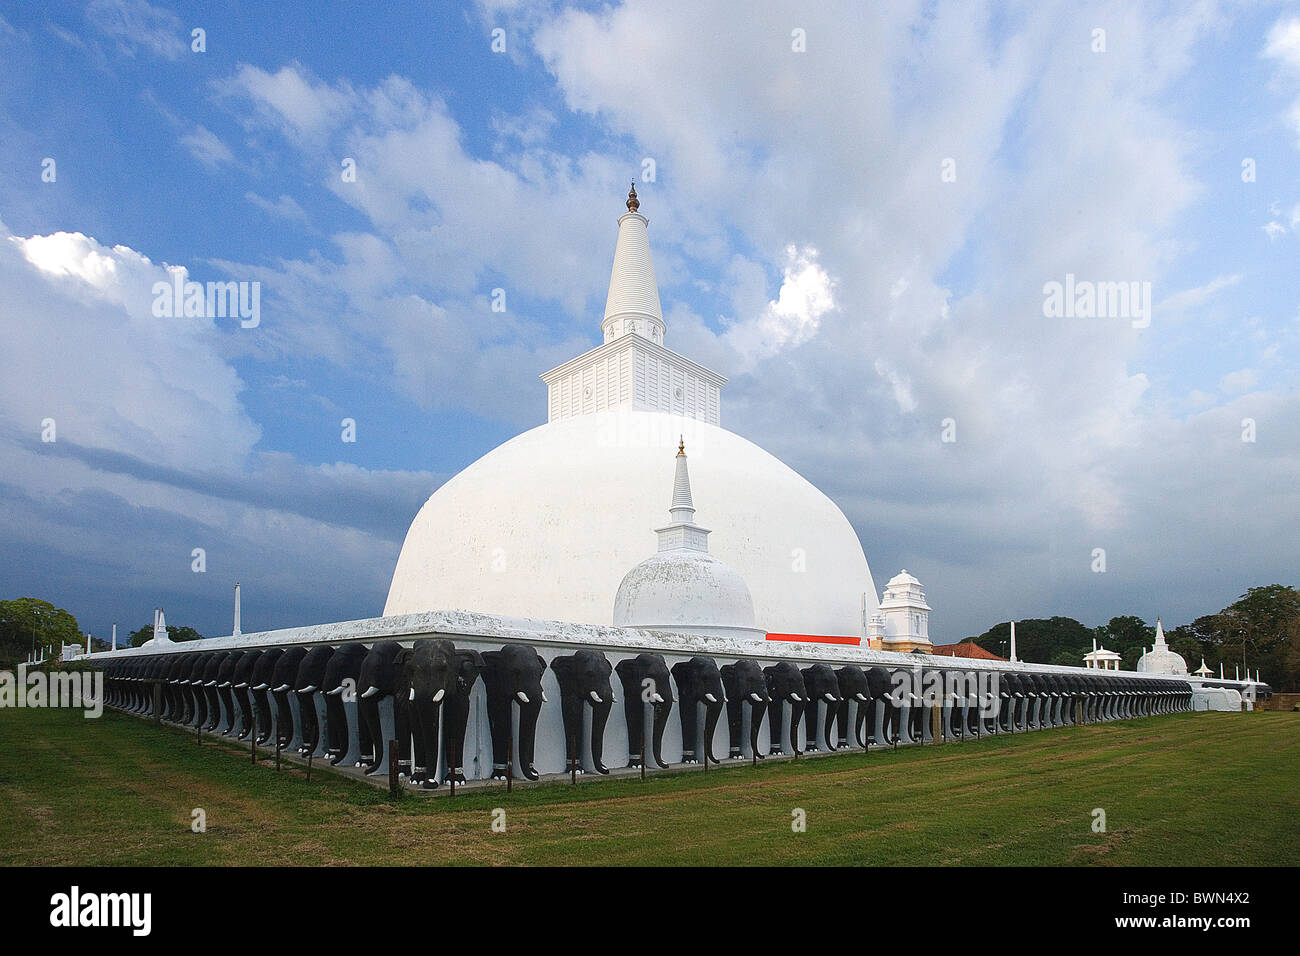 Sri Lanka Asien Anuradhapura antiken Städte UNESCO Welt Kulturerbe Website Ruvanvelisaya Dagoba Stupa Buddhismus cul Stockfoto